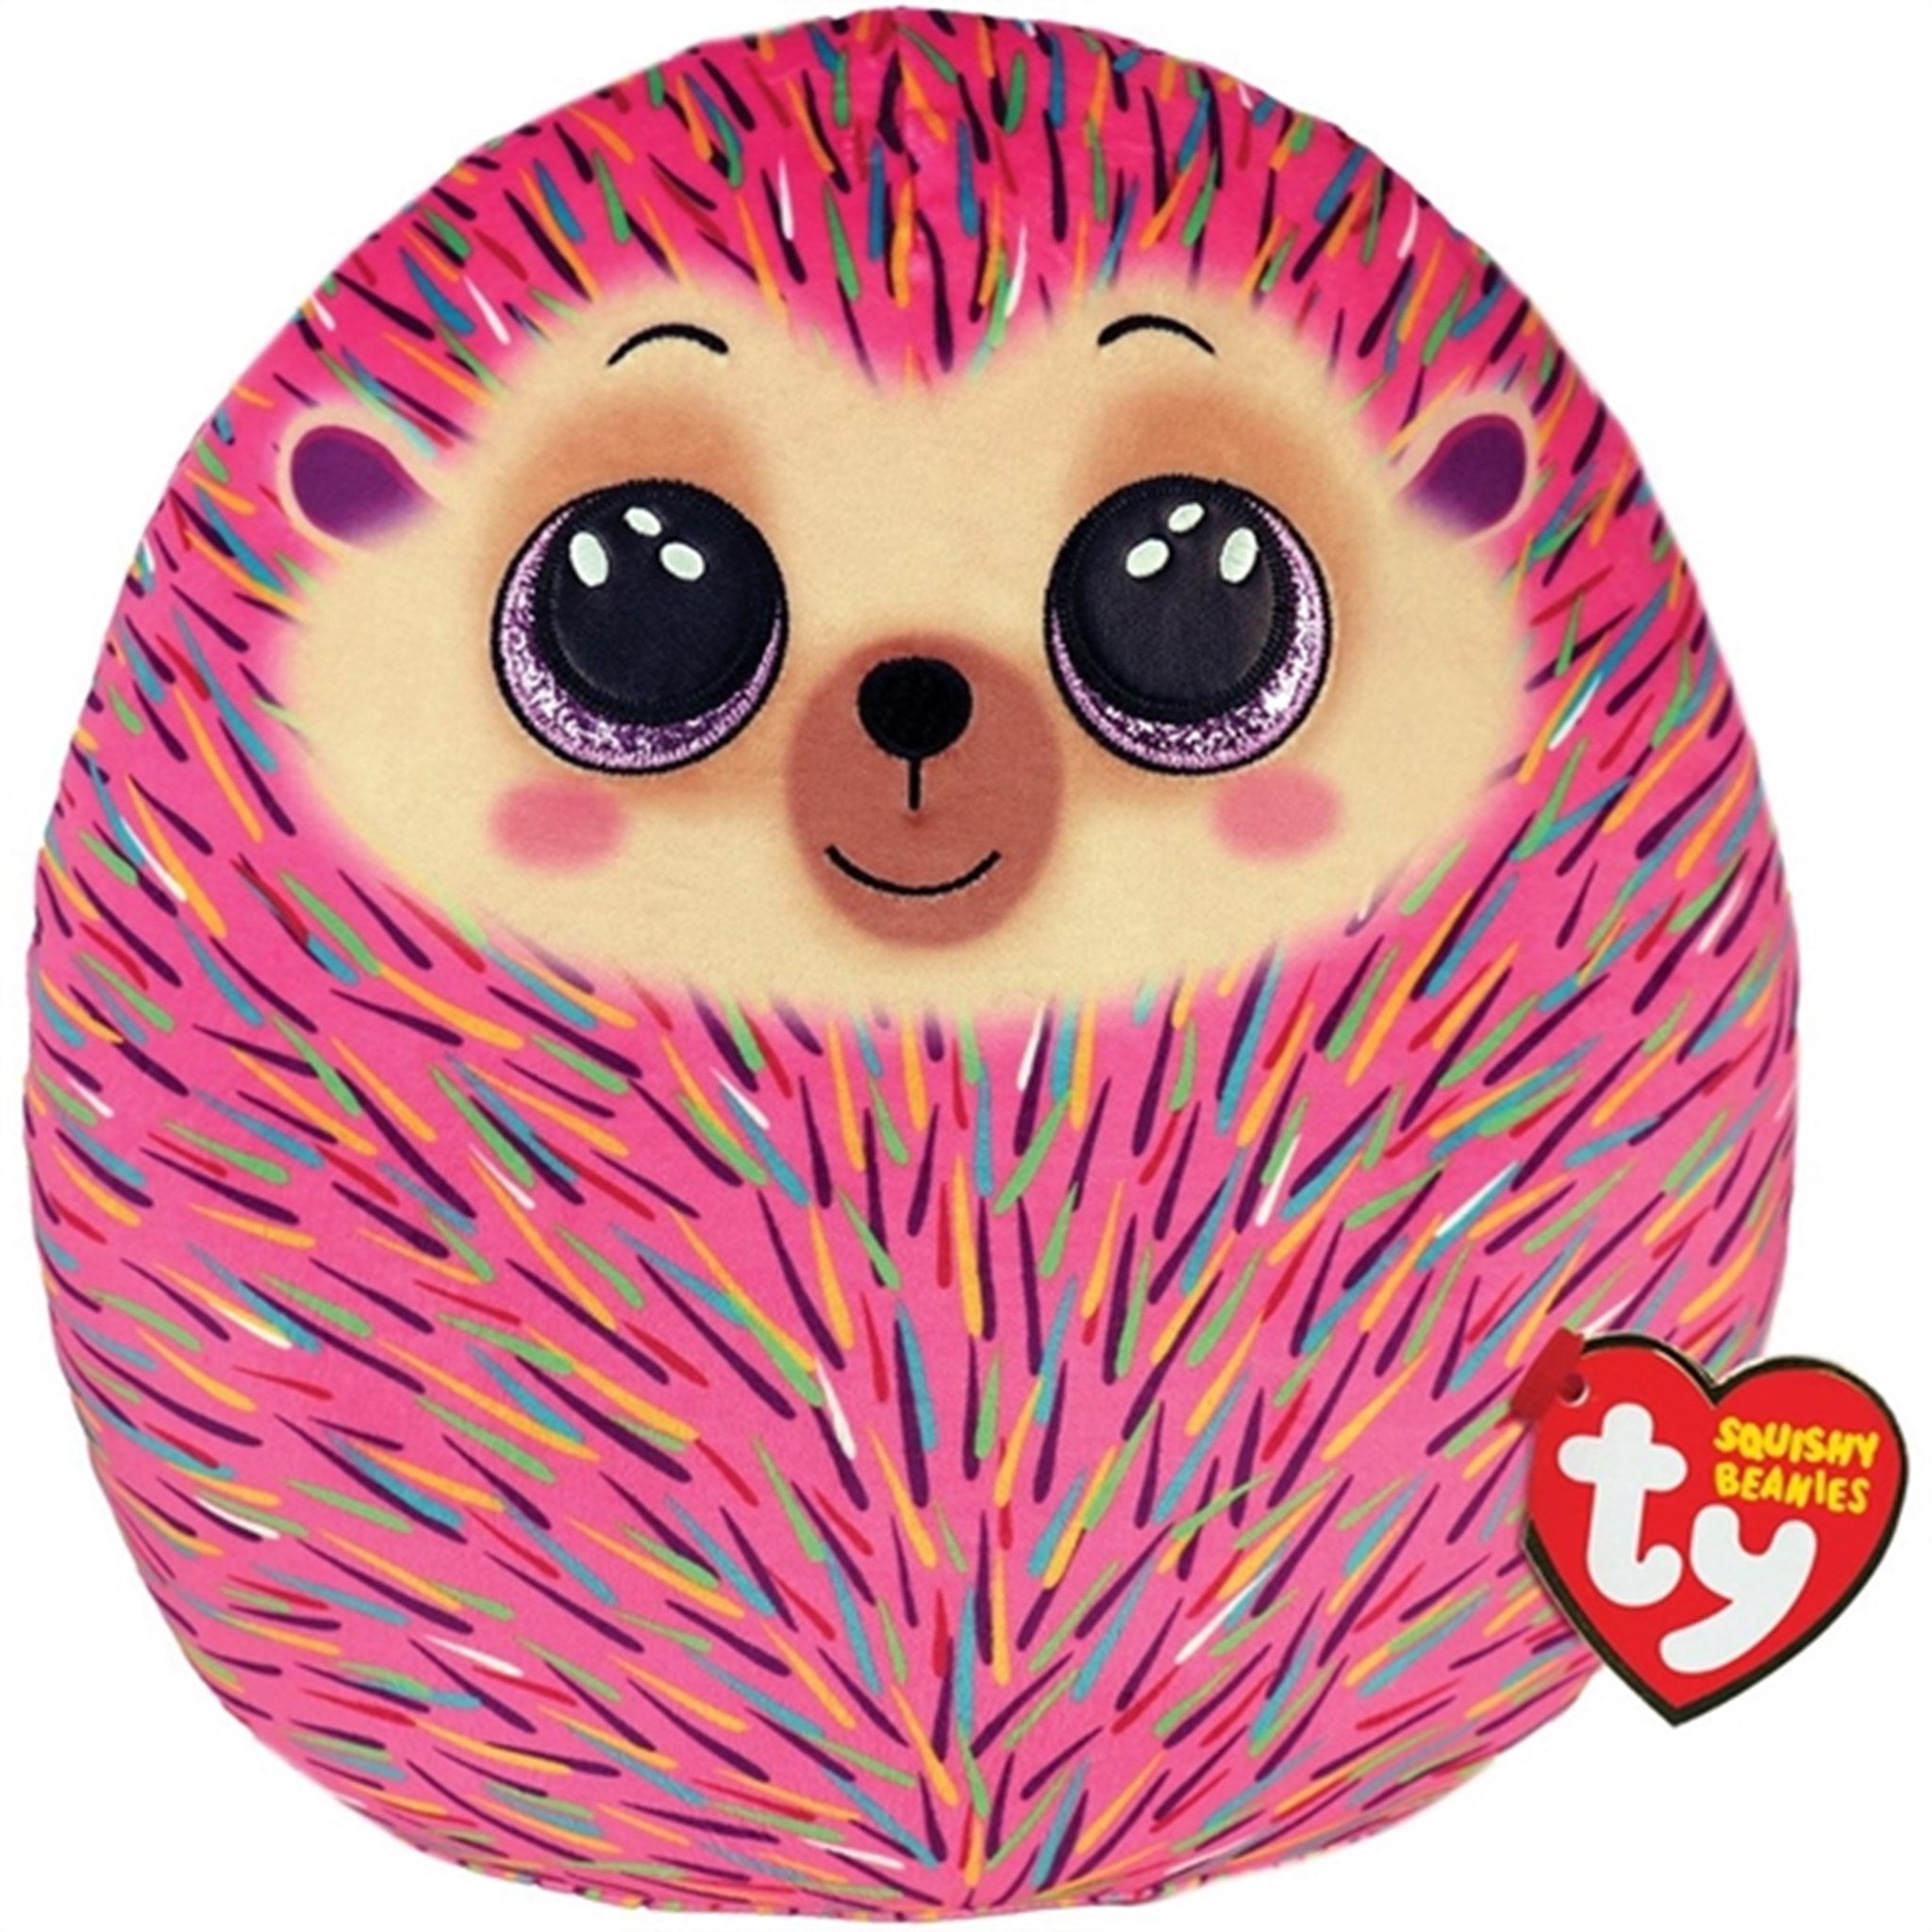 TY Squishy Beanies Hildee - Hedgehog Squish 25cm